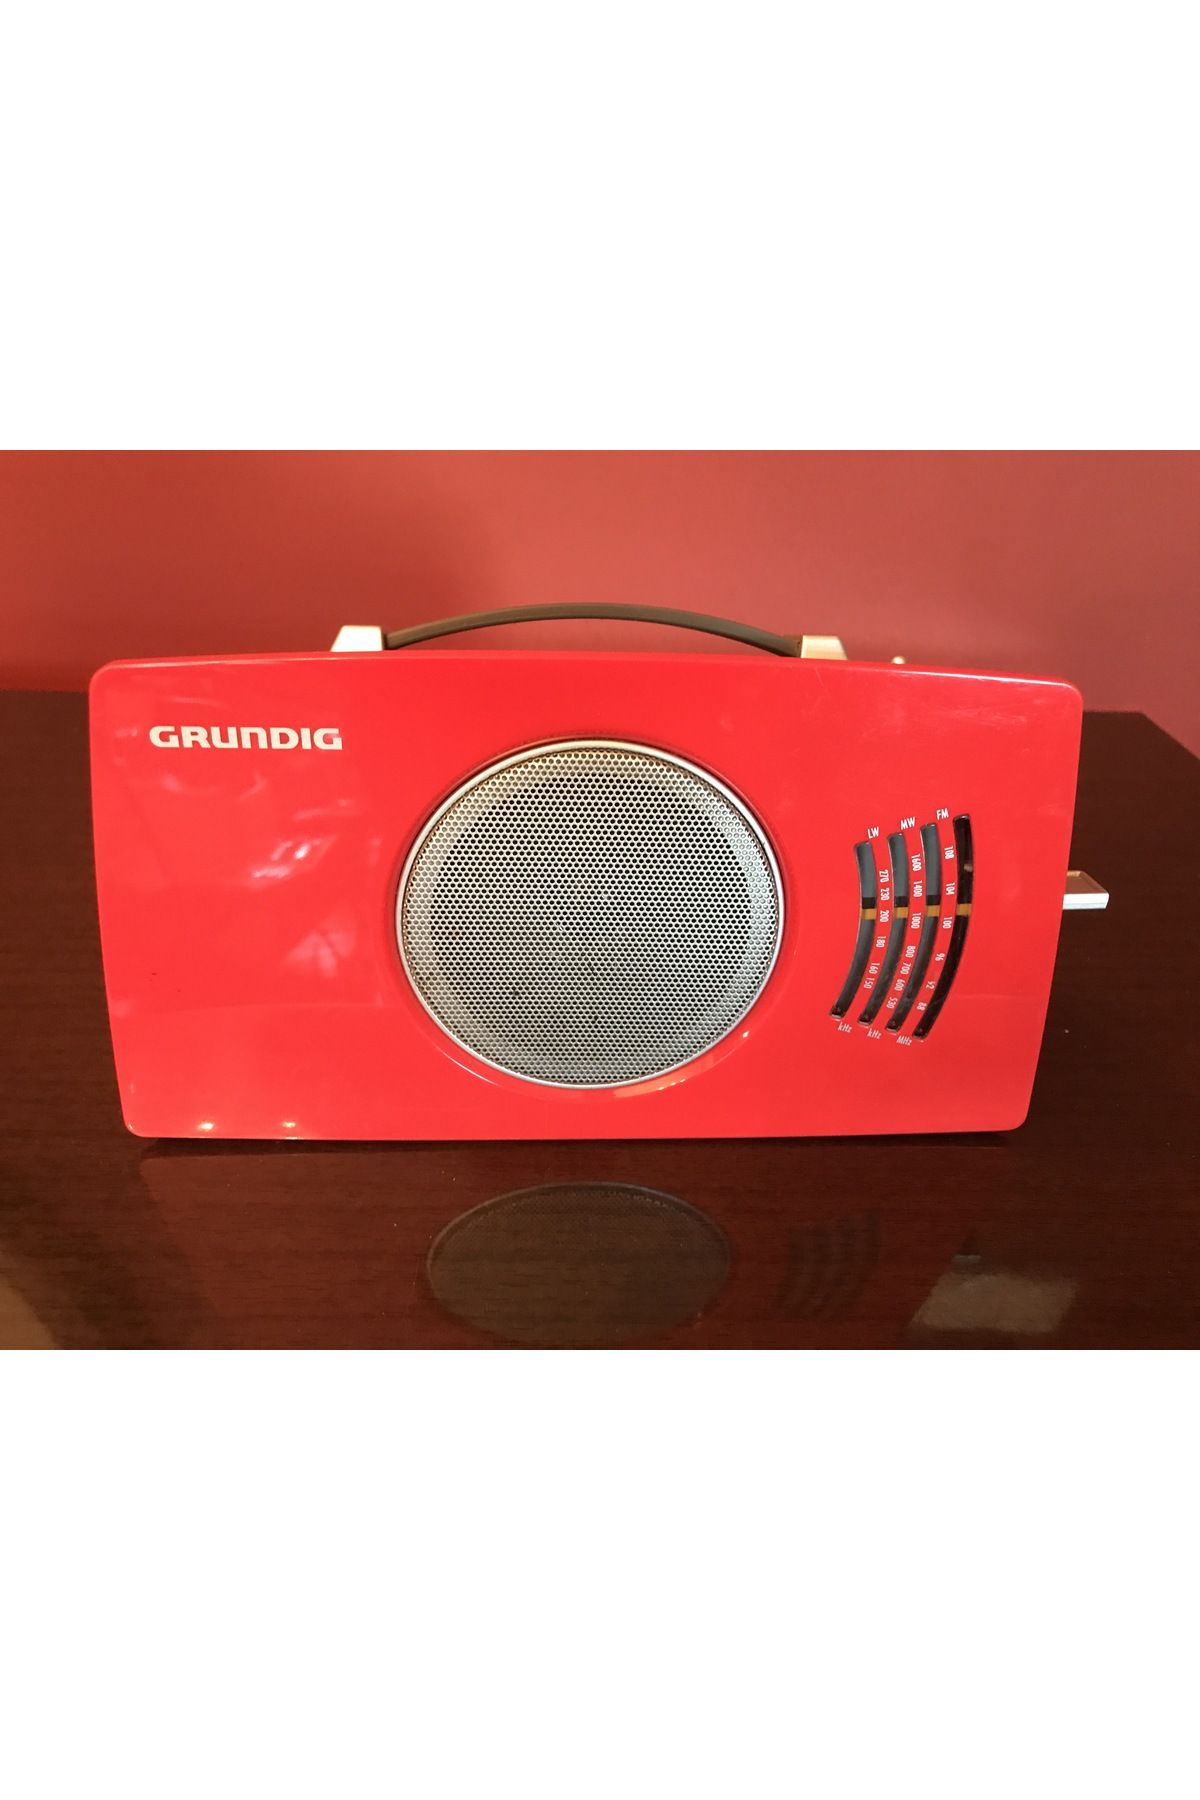 Grundig 1980’s Grundig RP4900 kırmızı radyo - çalışır durumda